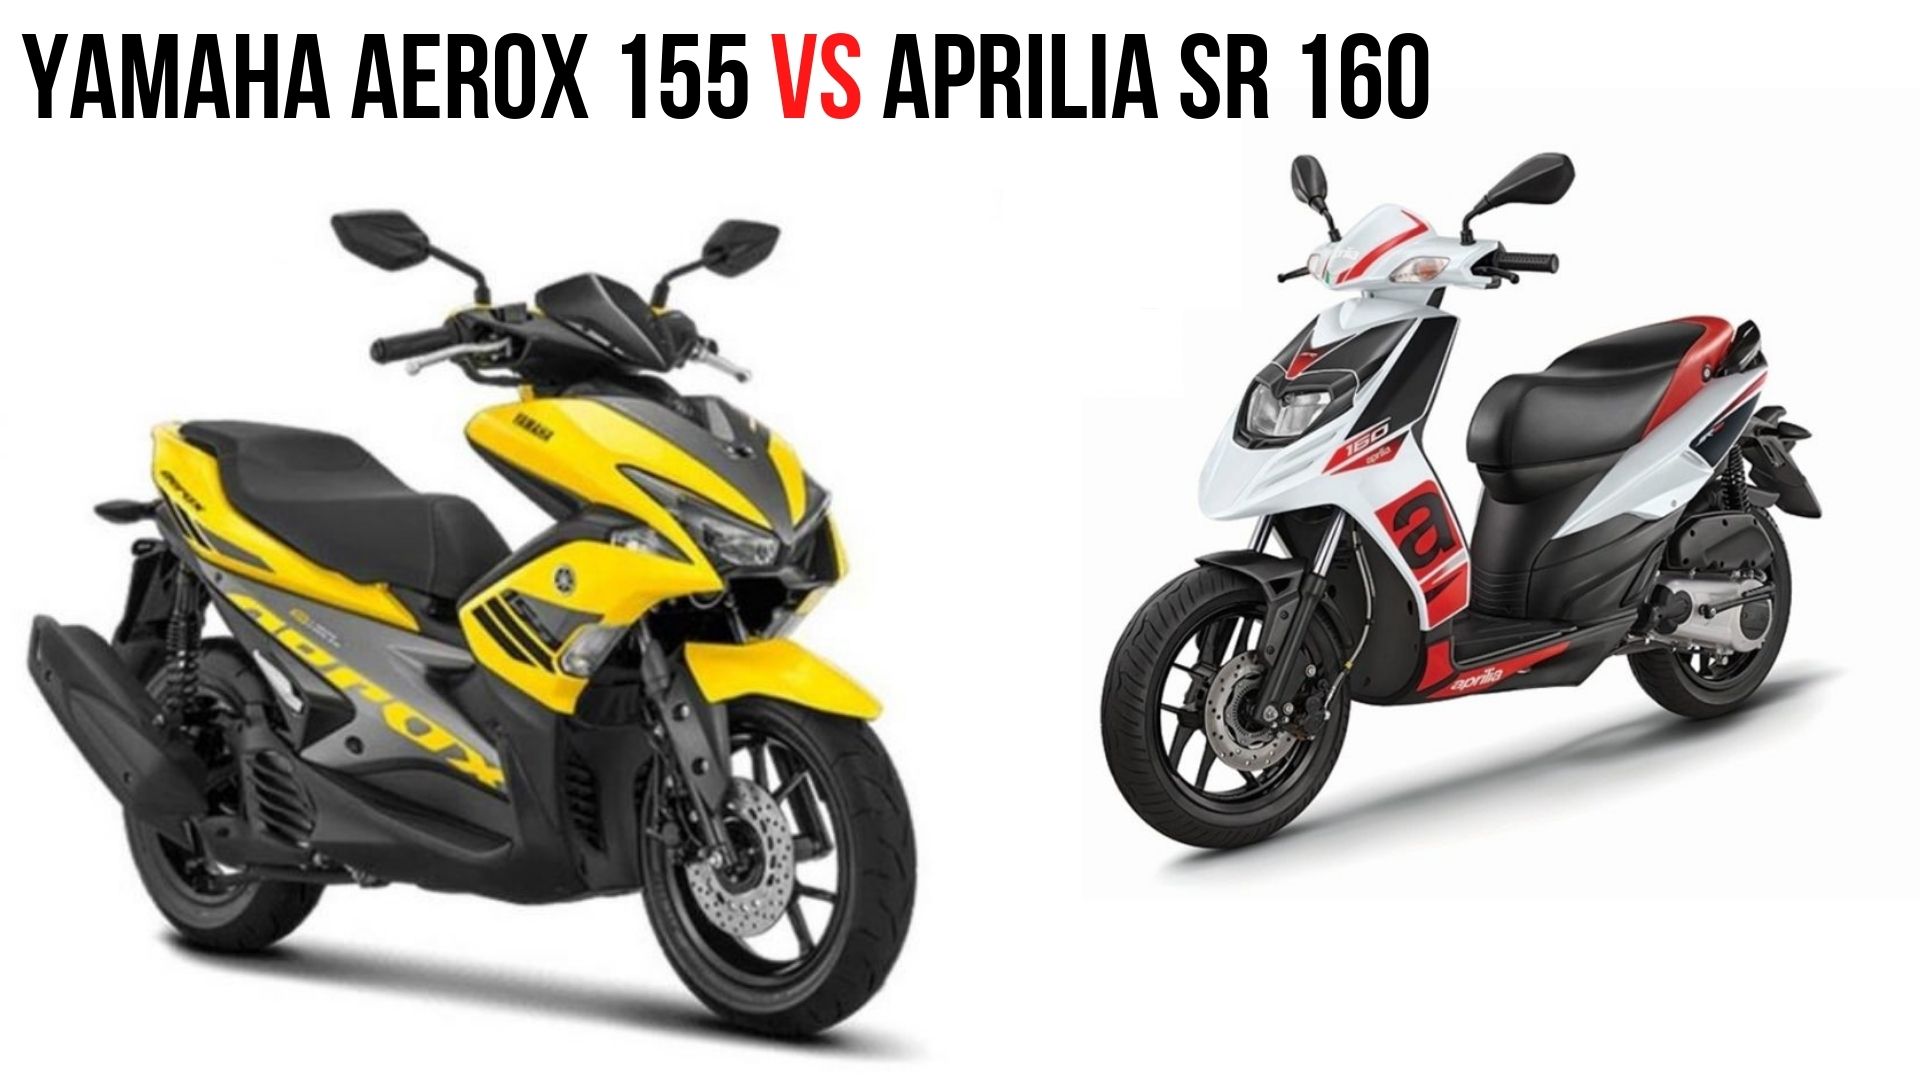 Yamaha Aerox 155 Vs Aprilia SR 160 Detailed Specs Comparison